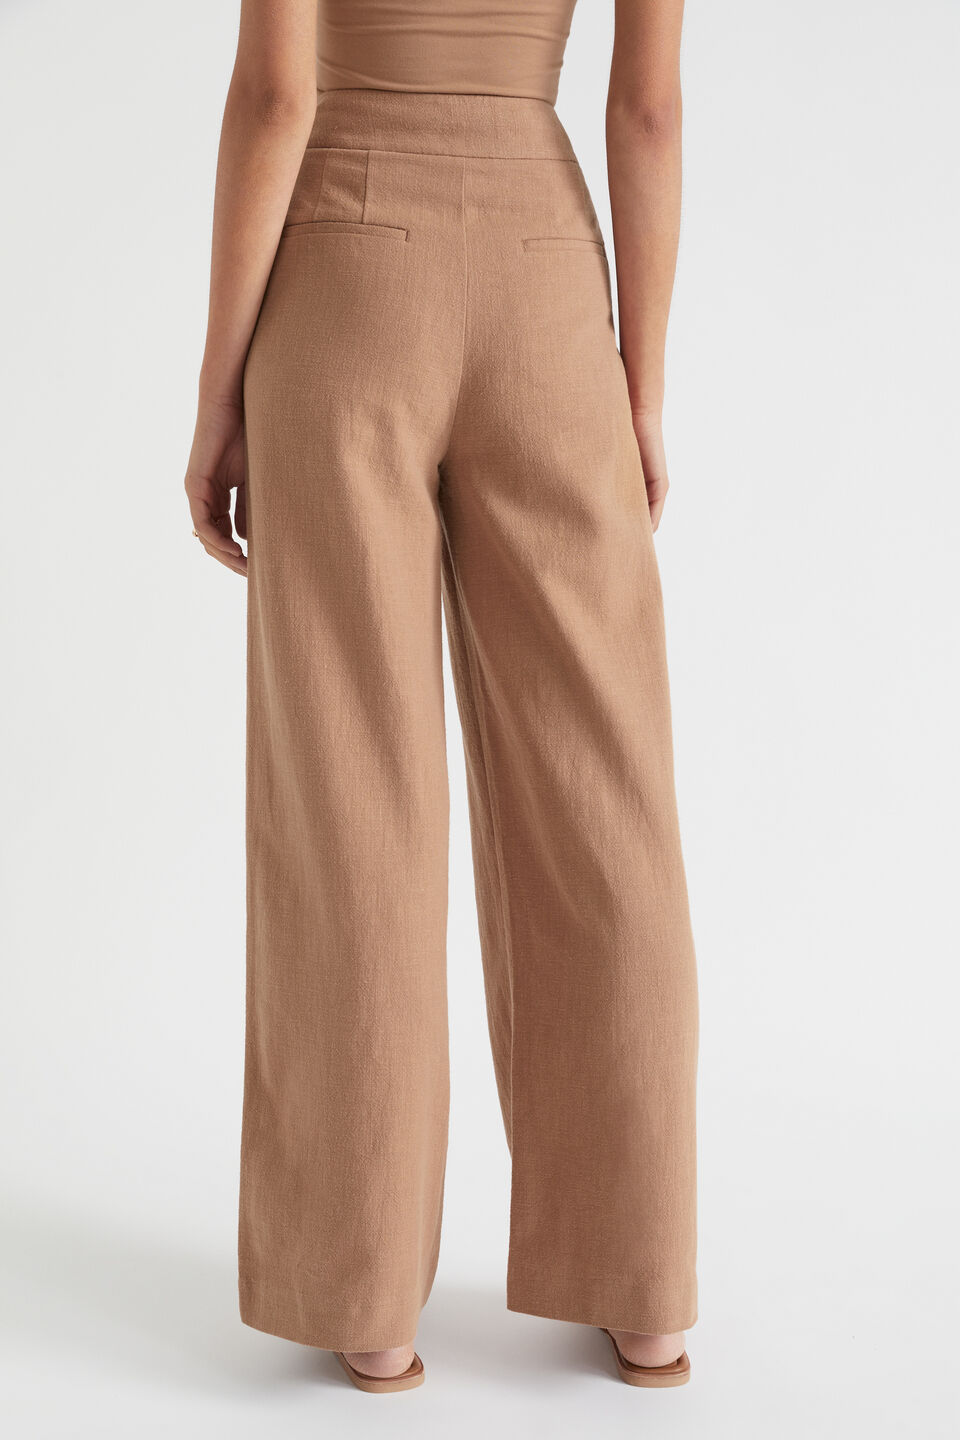 Textured Wide Leg Button Pant  Auburn Brown